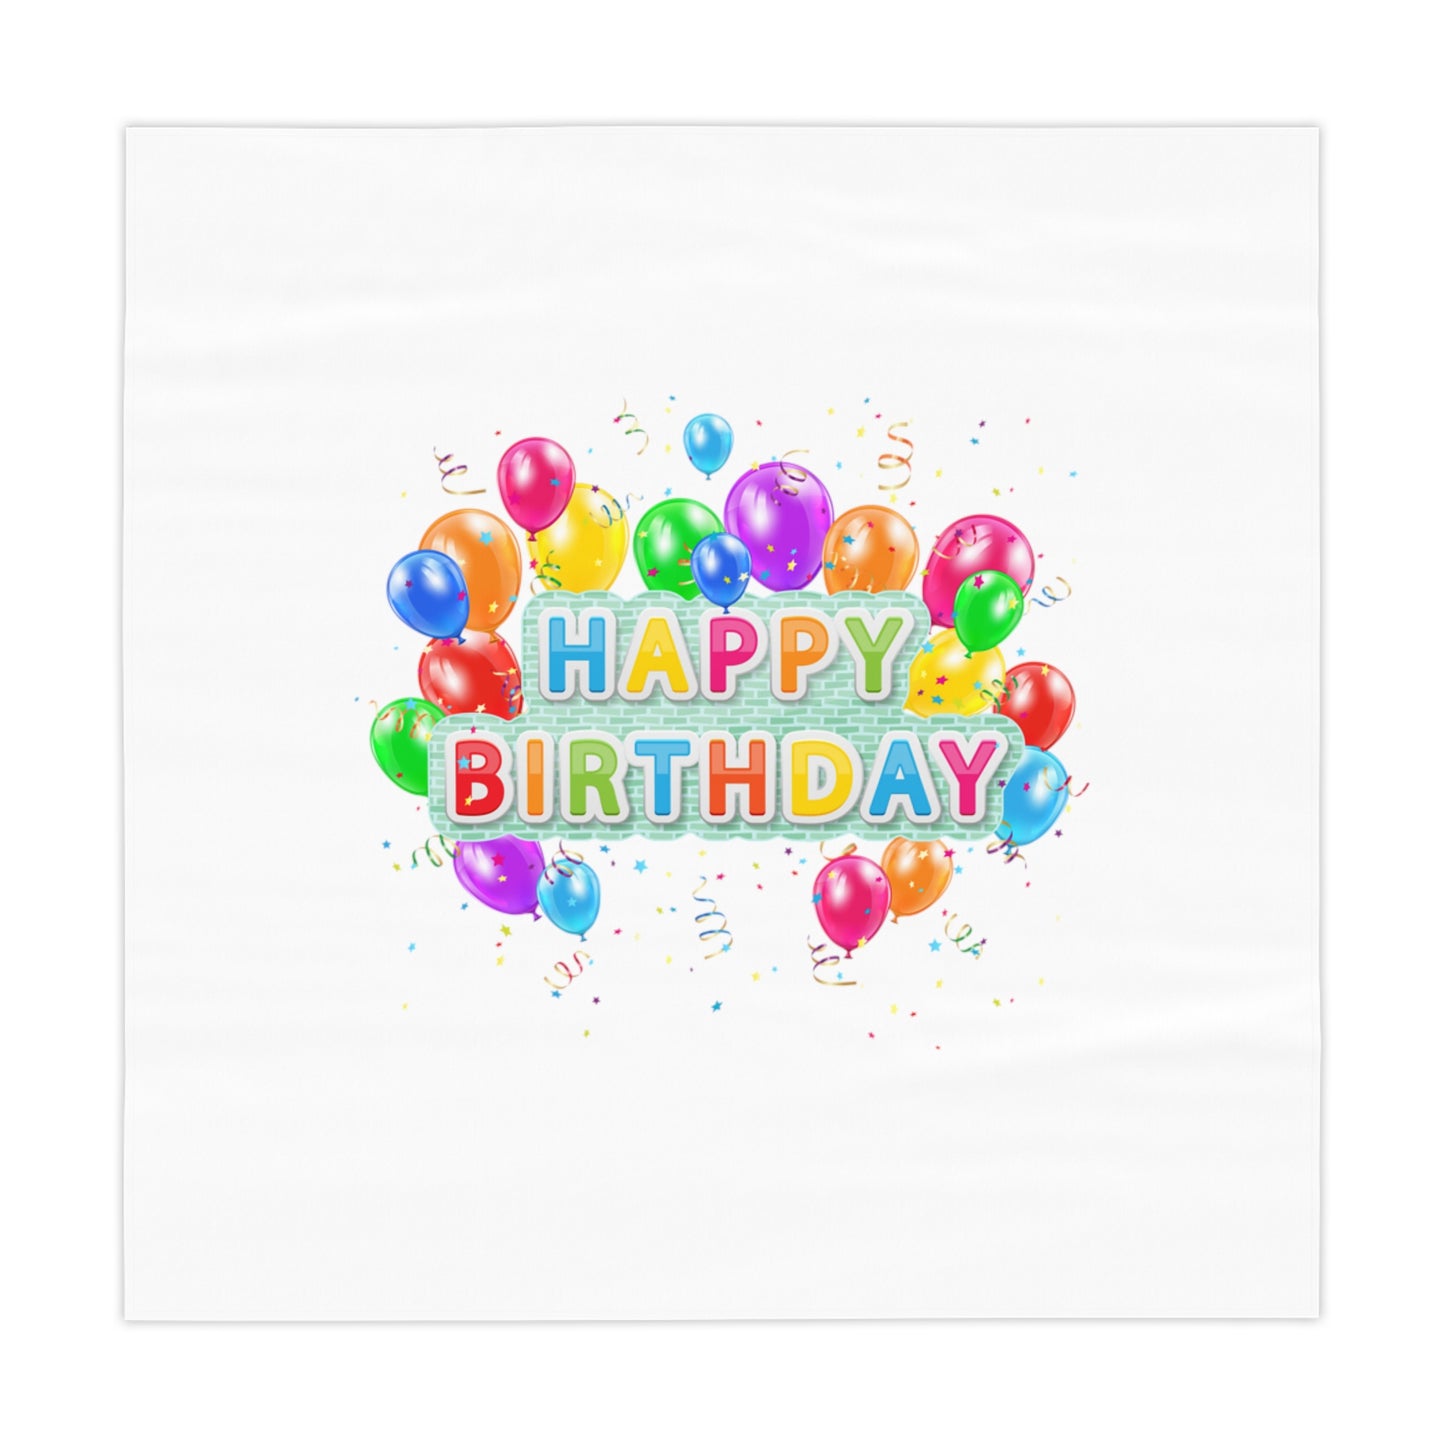 "Happy Birthday" Colorful BalloonsTablecloth